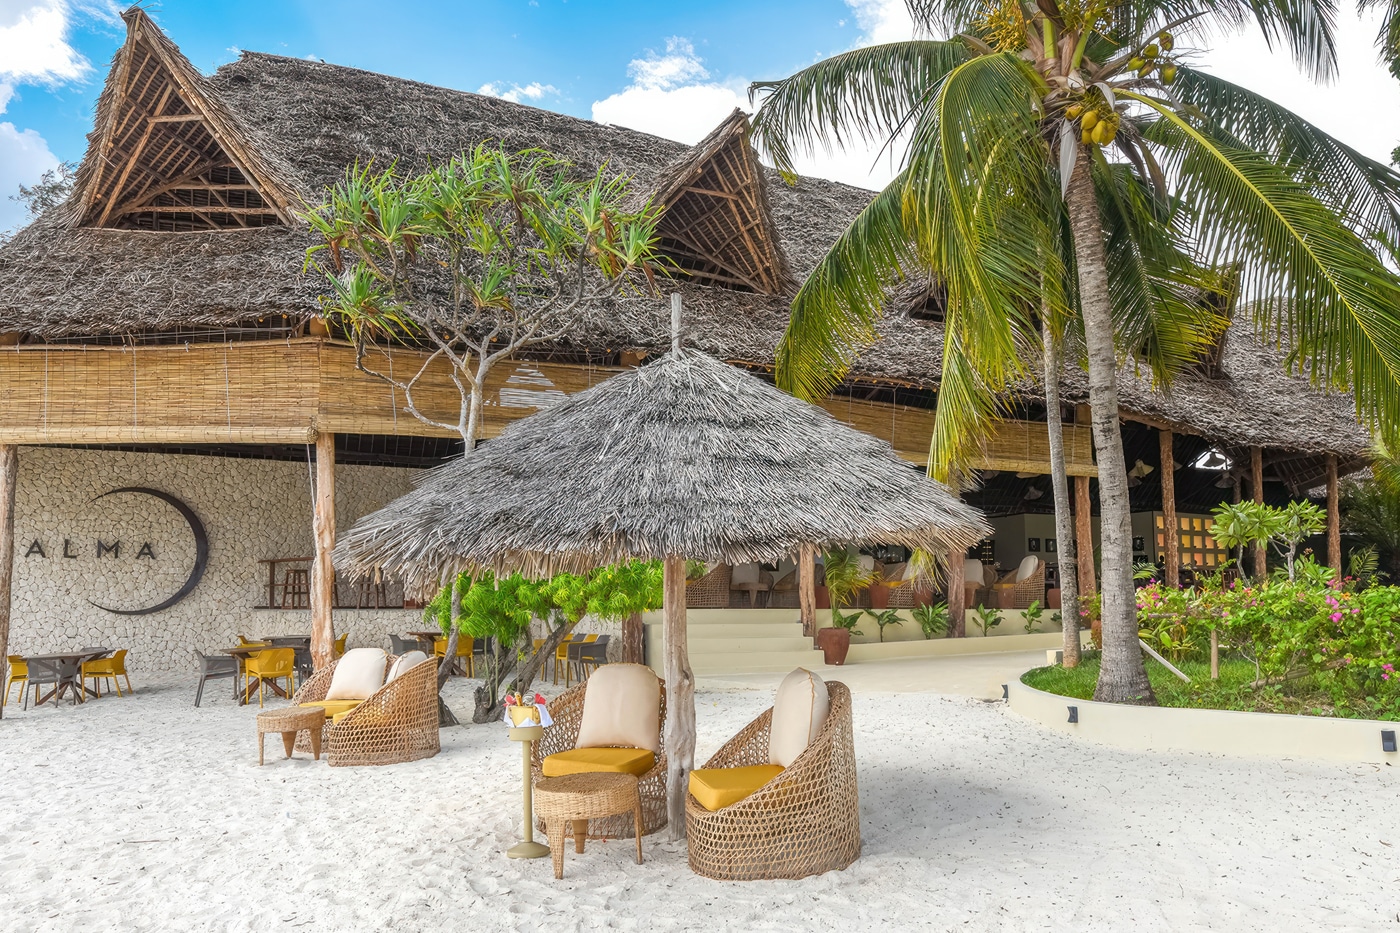 Alma boutique hotel -accommodation in jambiani beach zanzibar– easy travel tanzania